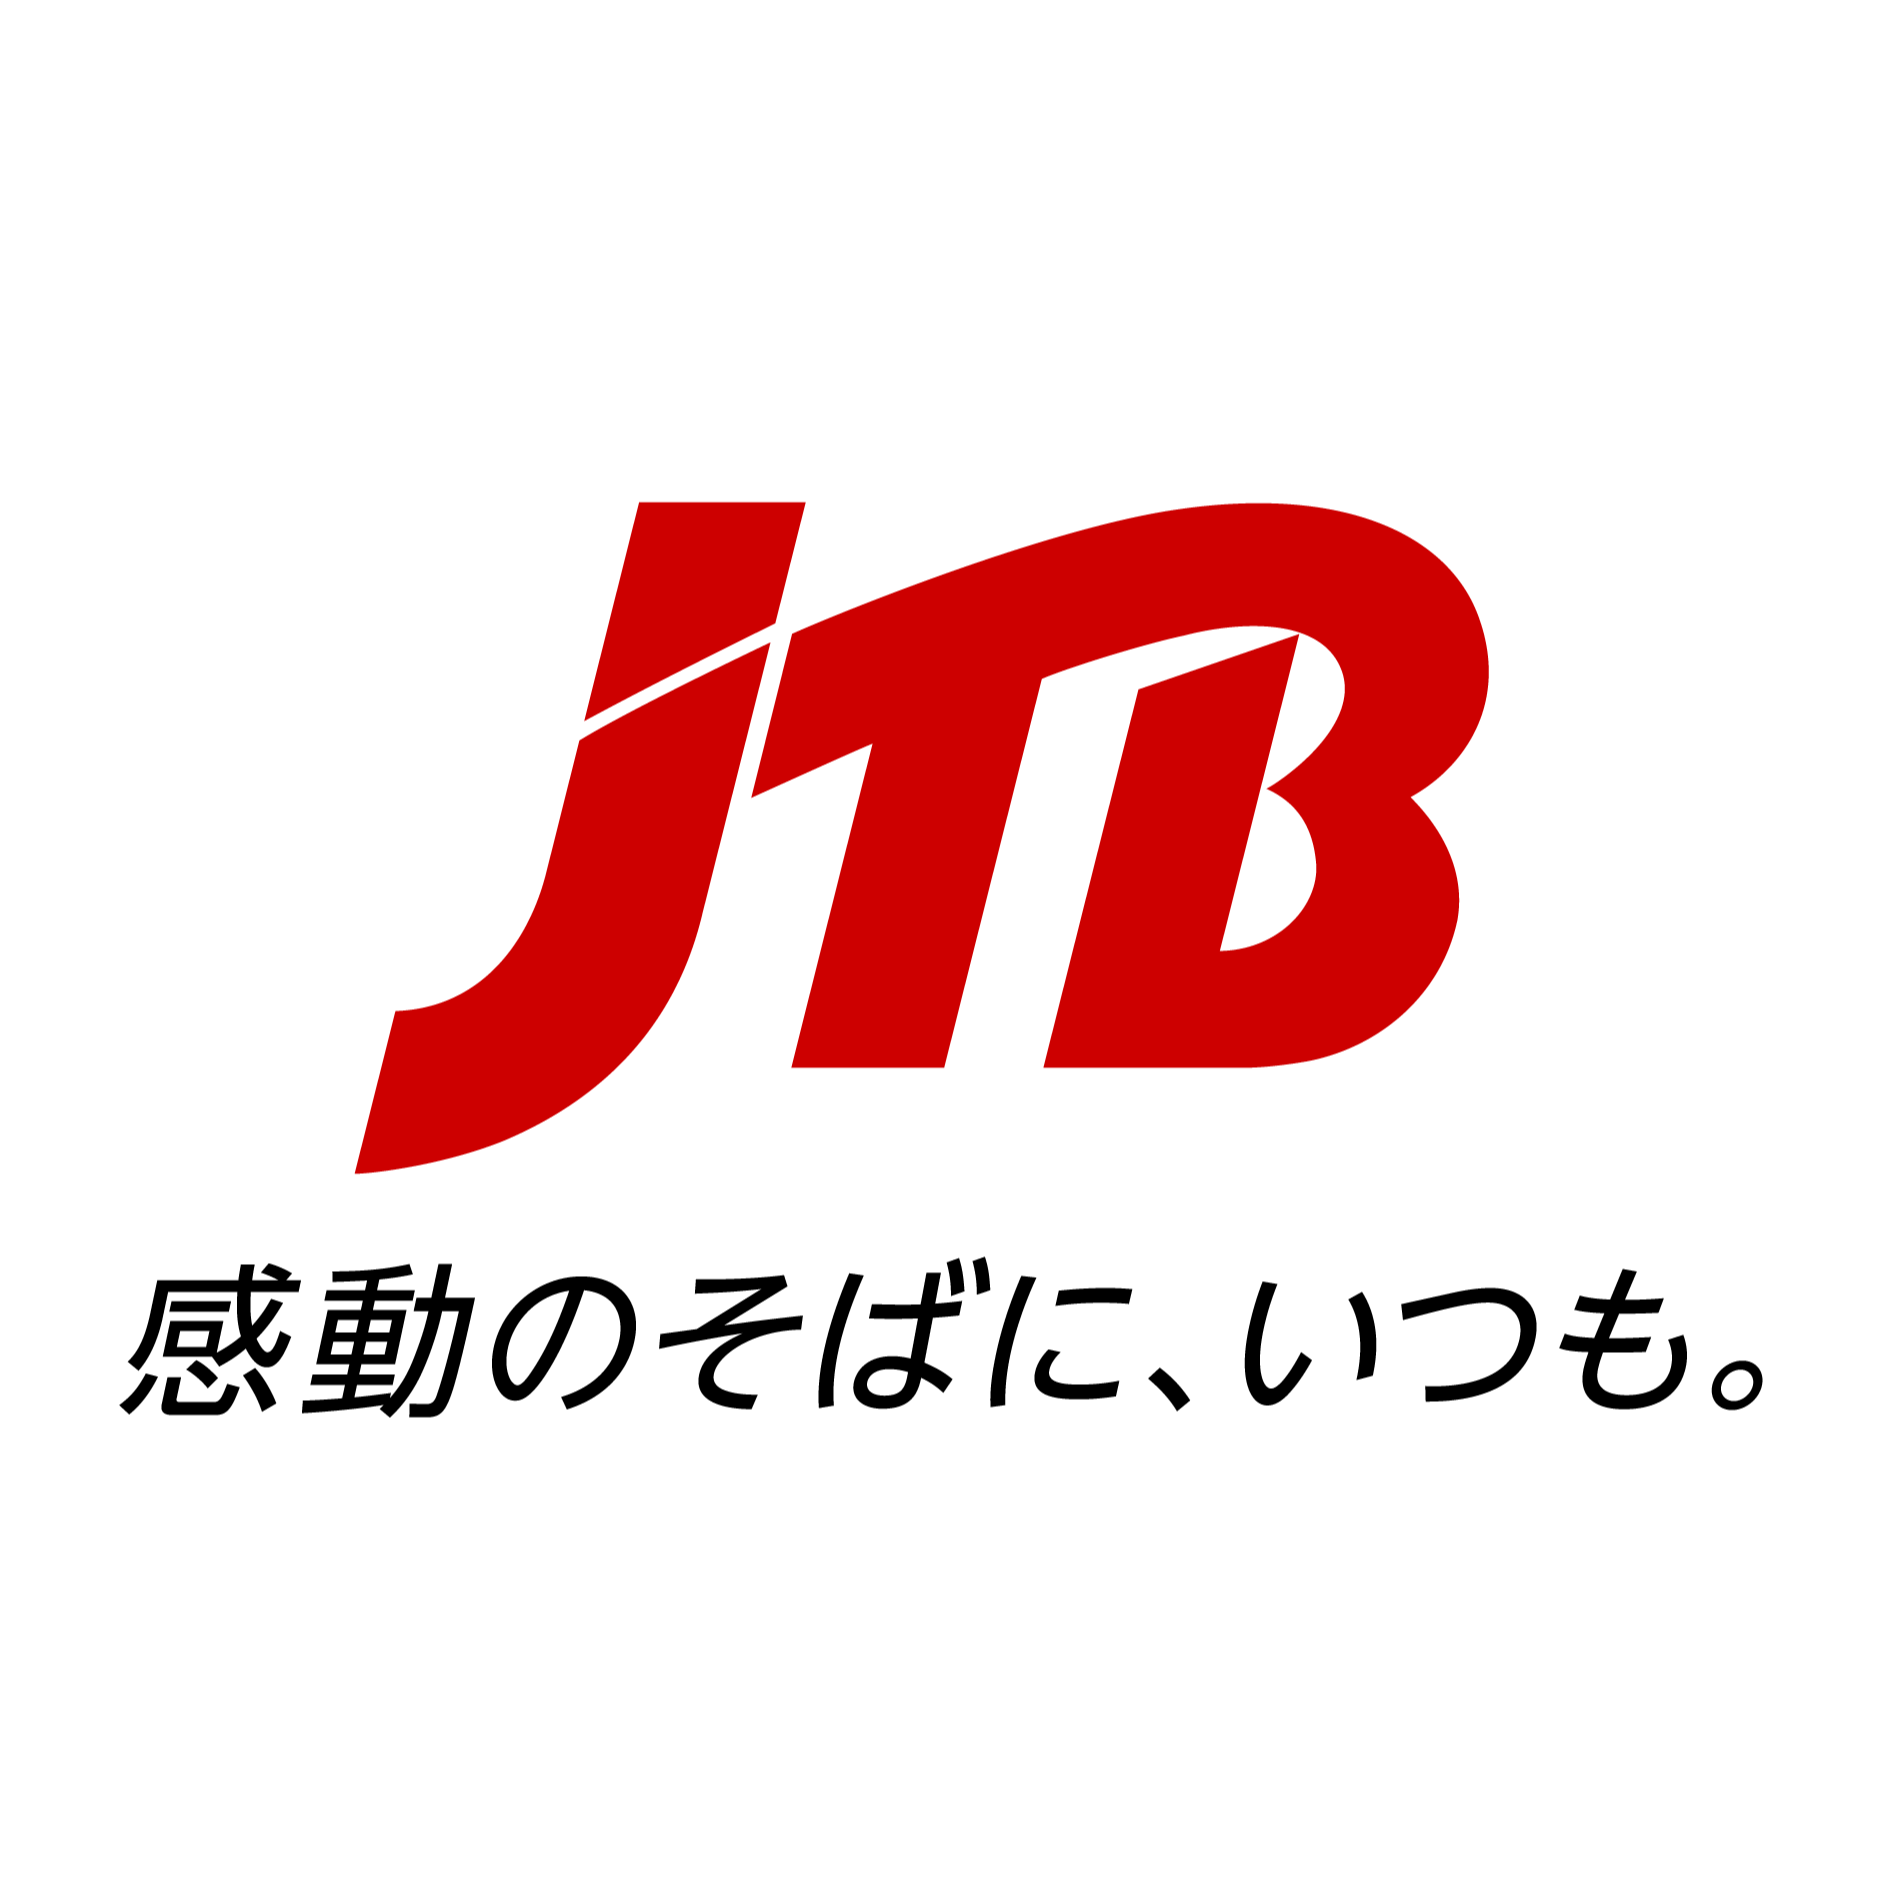 JTB ふるさと開発事業部 Logo